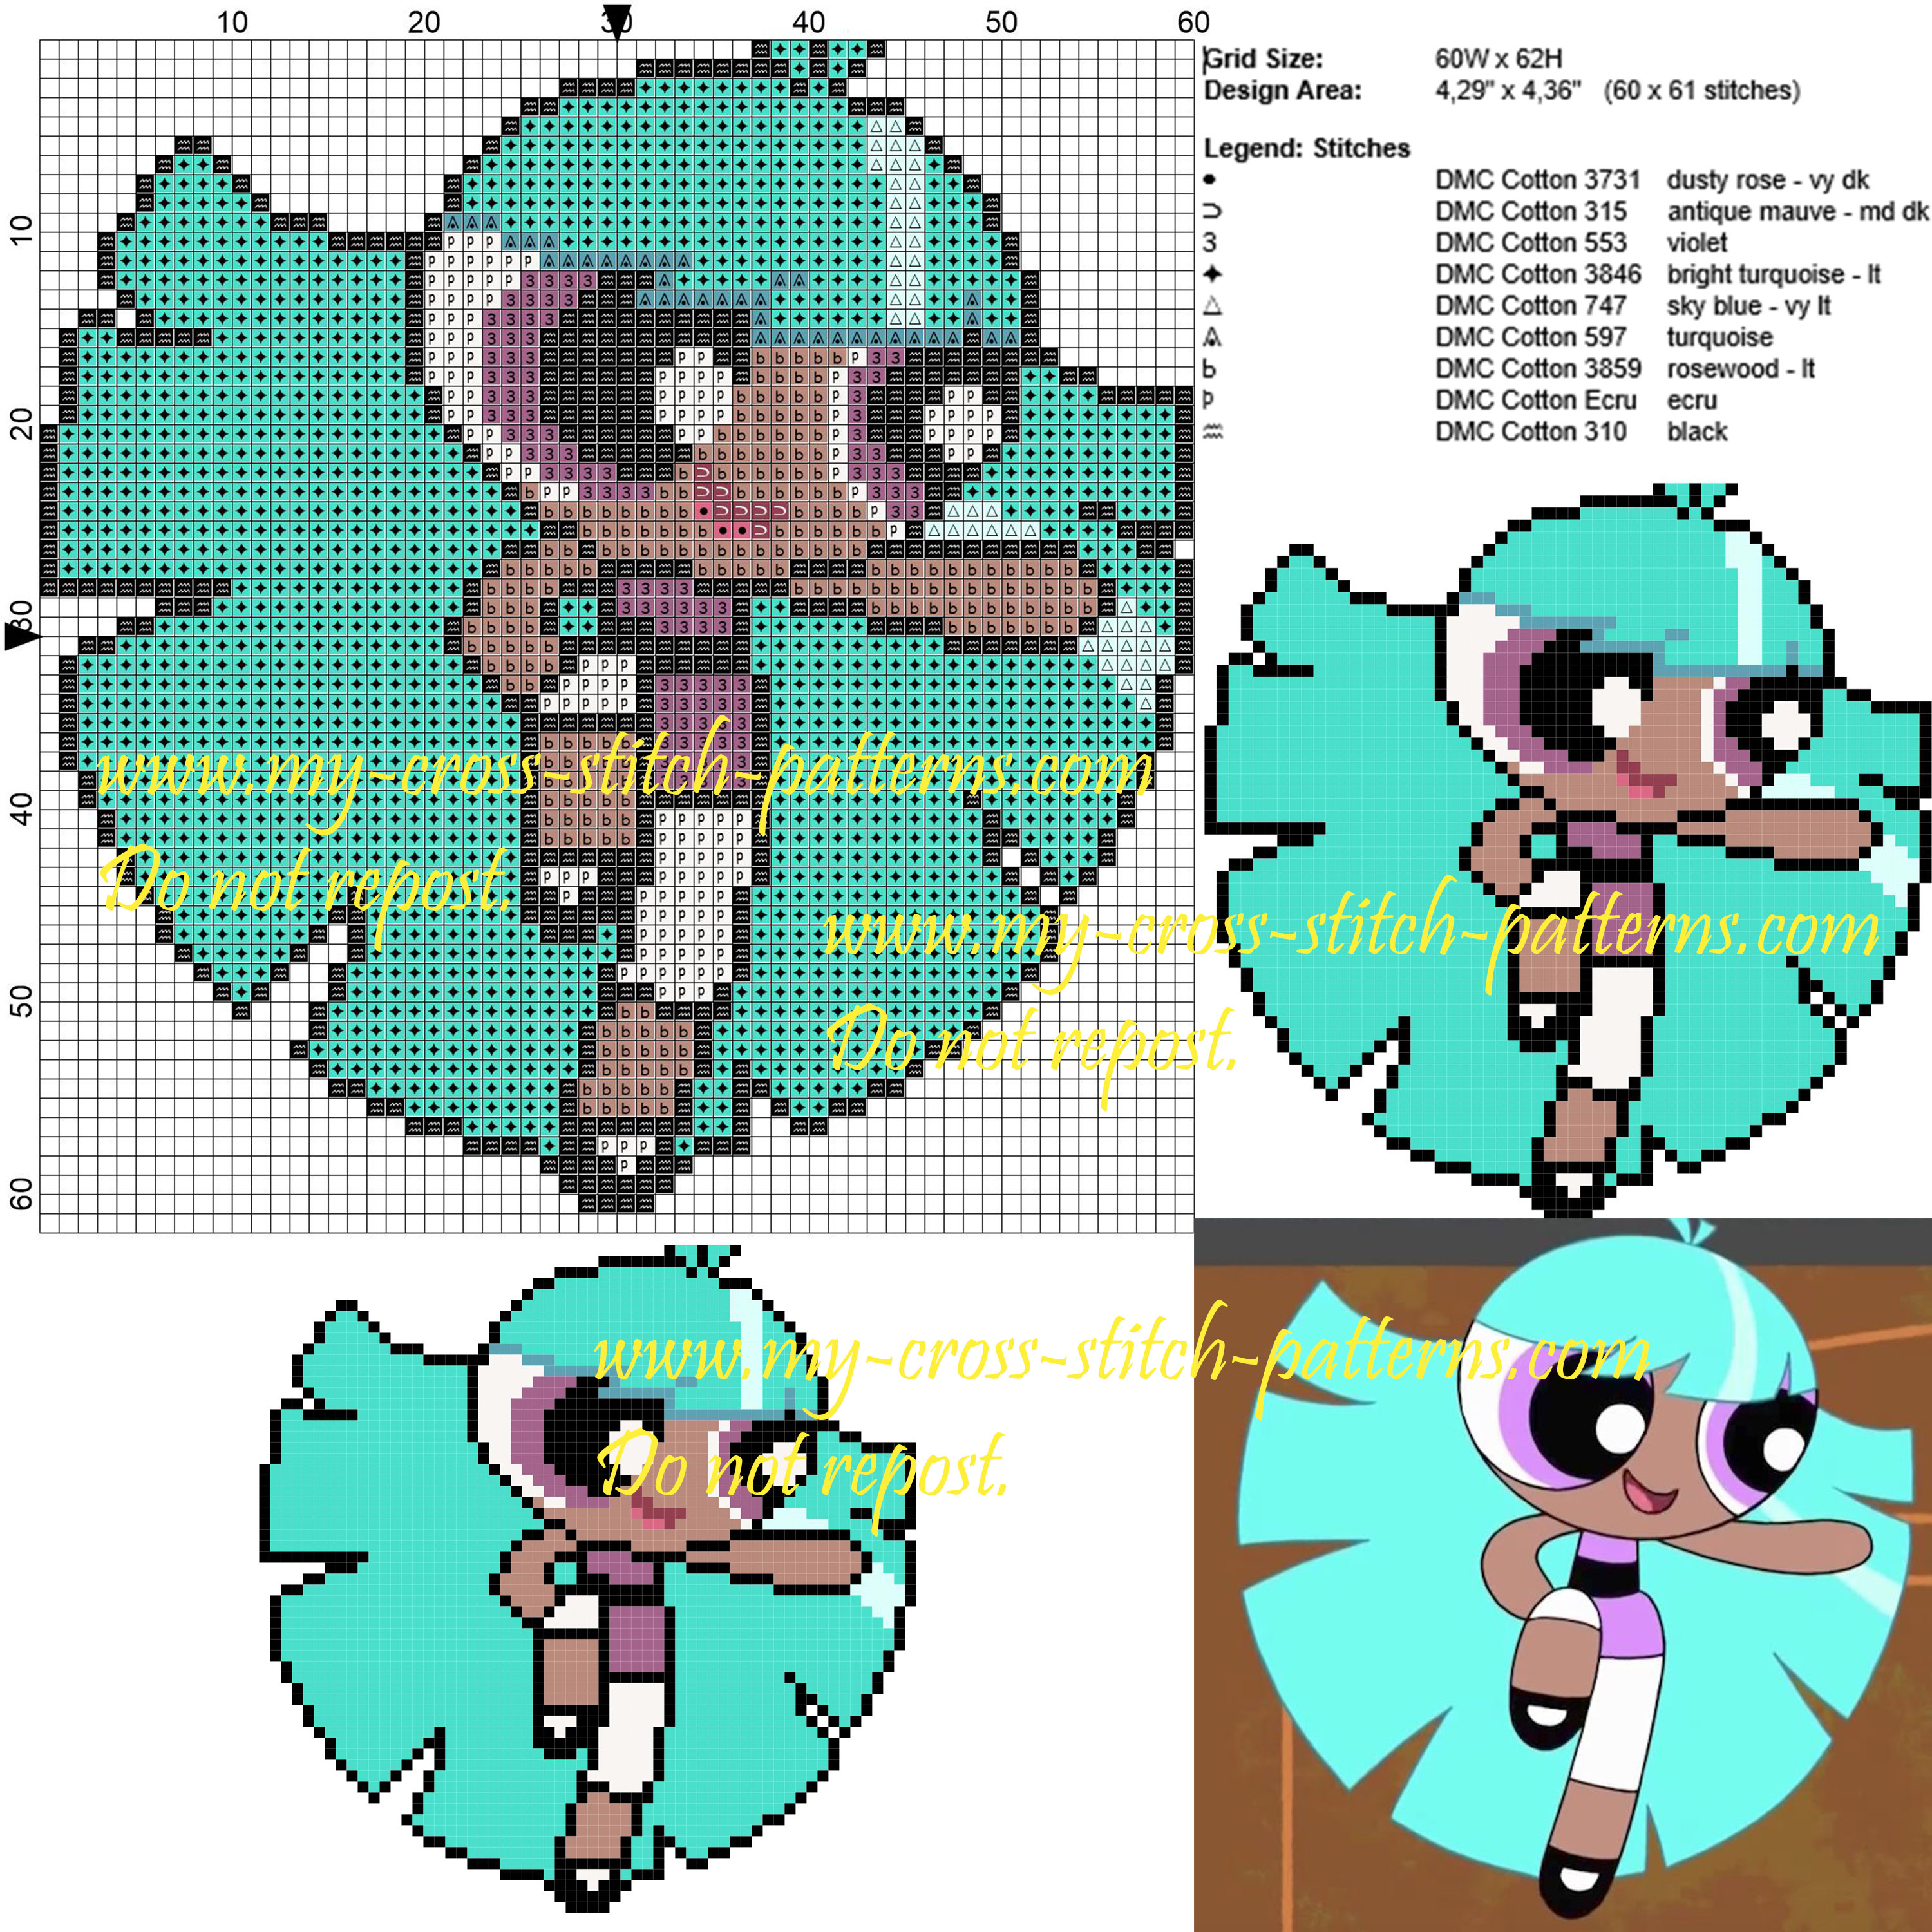 Bliss Powerpuff cross stitch pattern 60x62 9 colors